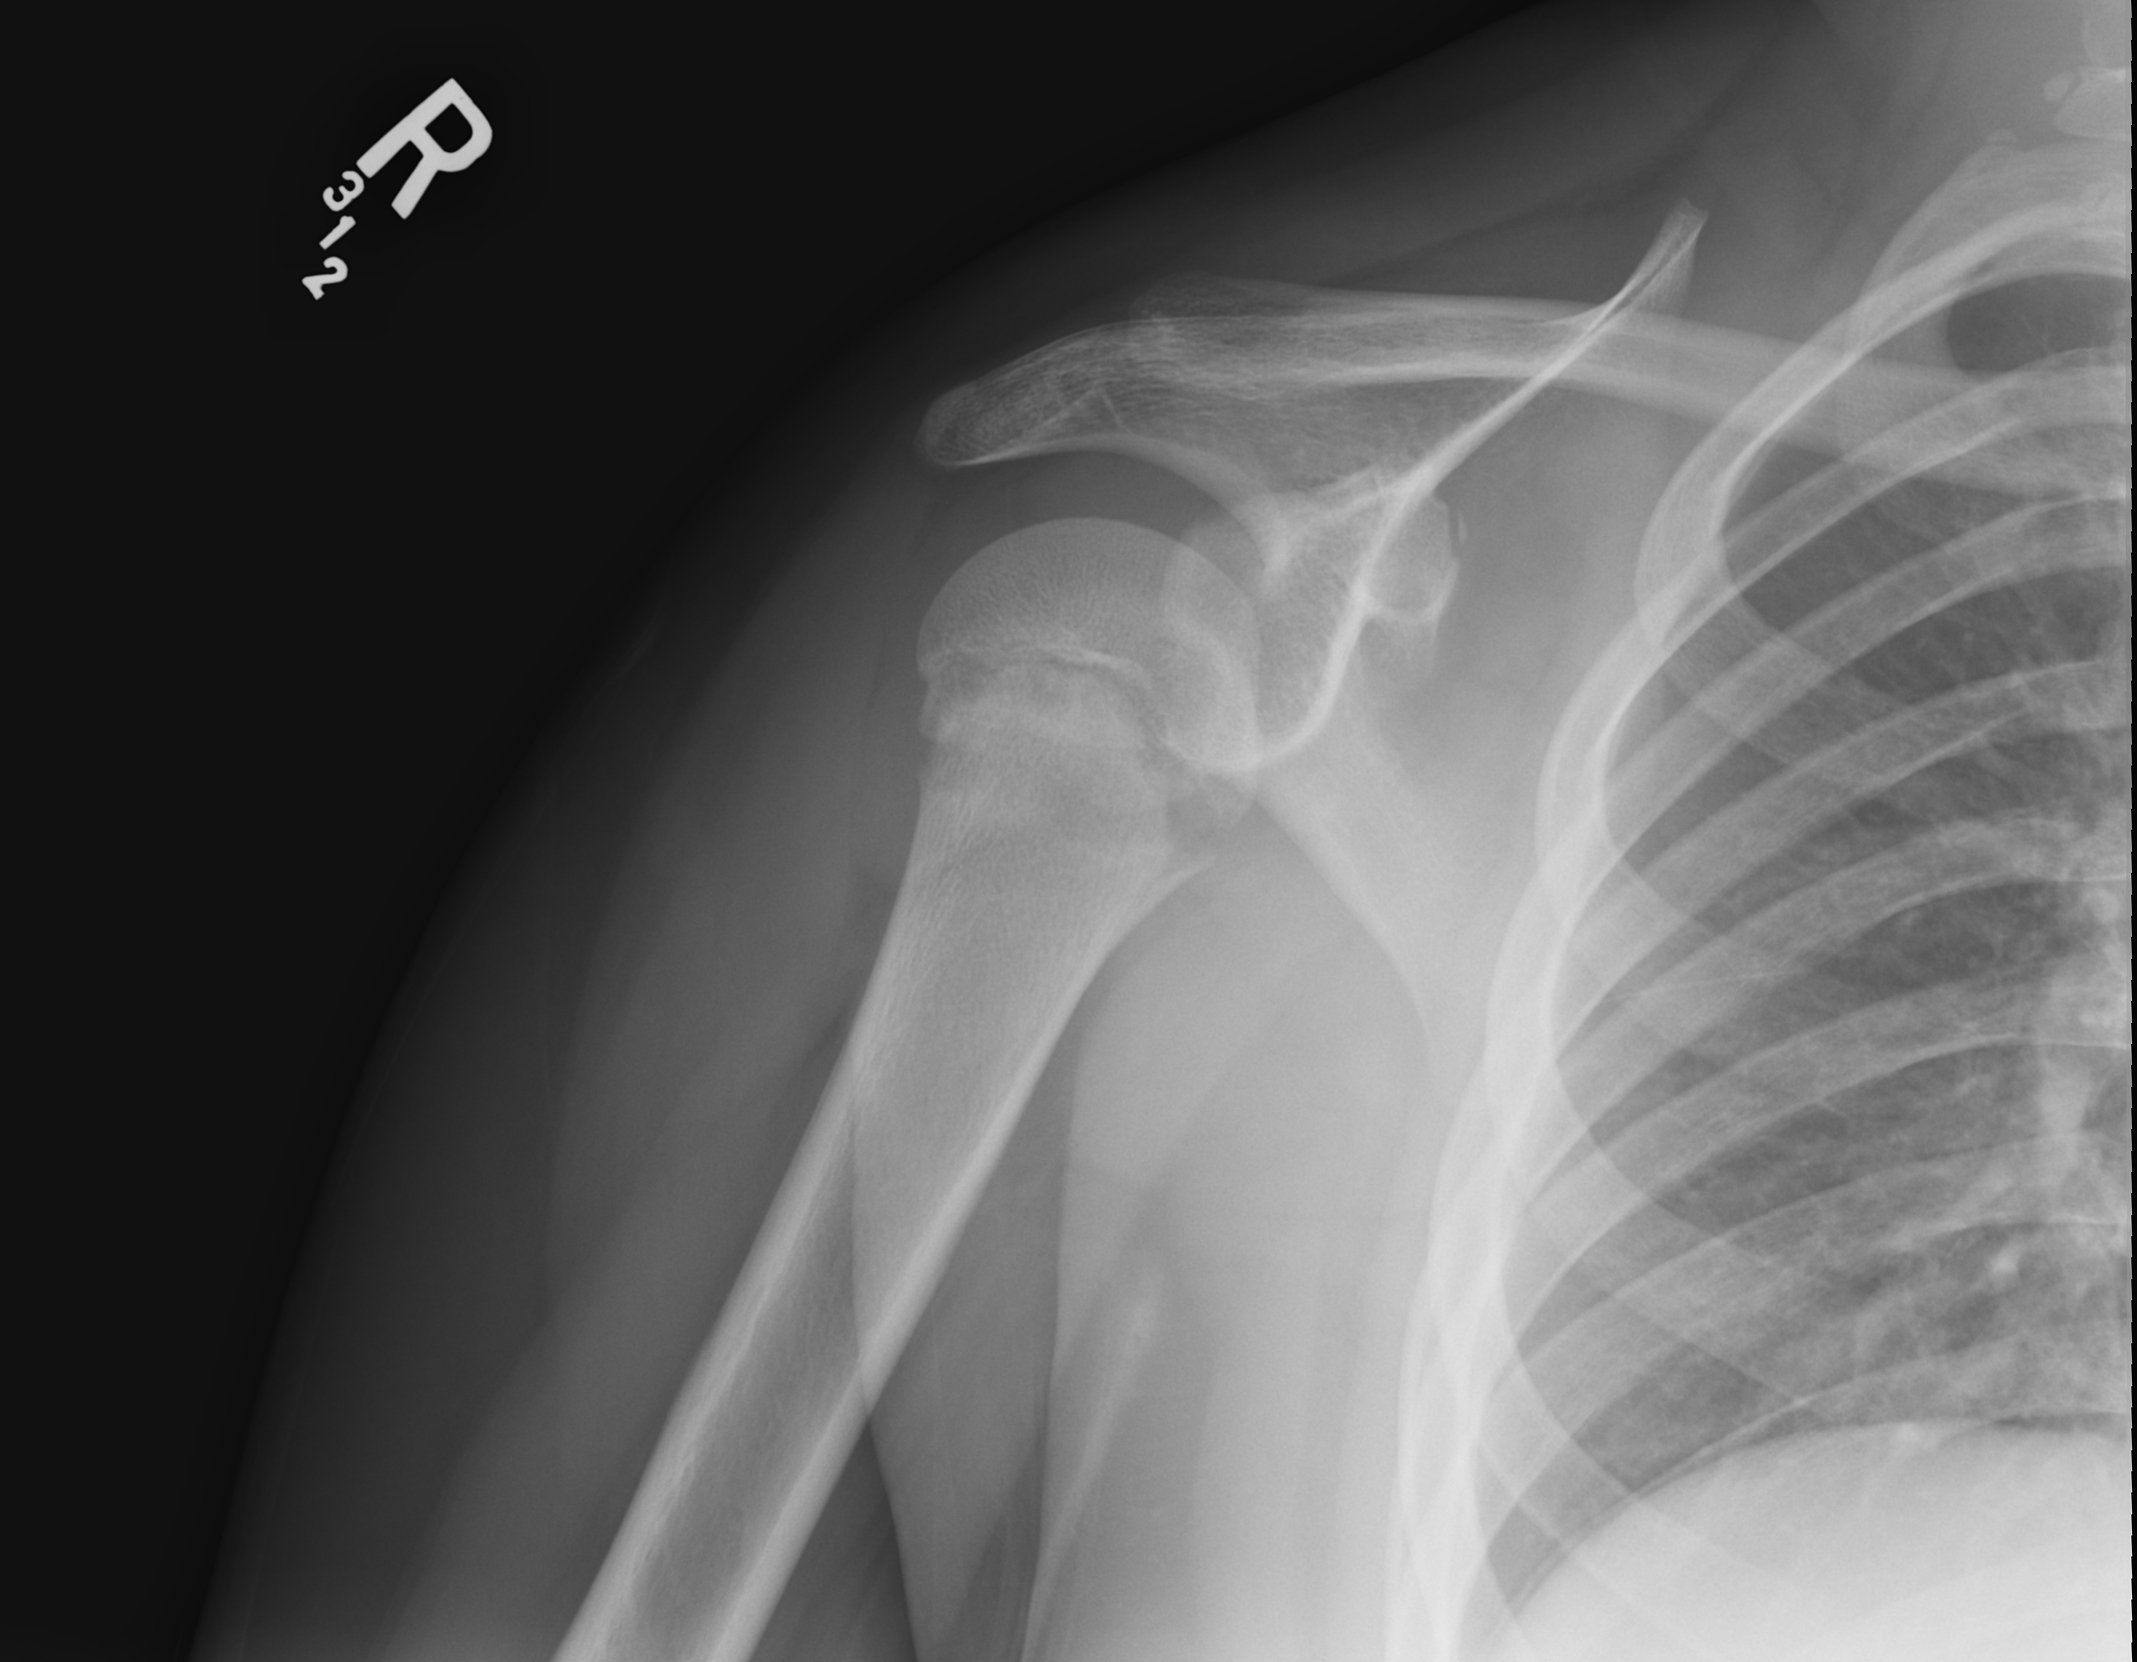 Shoulder x-ray - internal rotation view